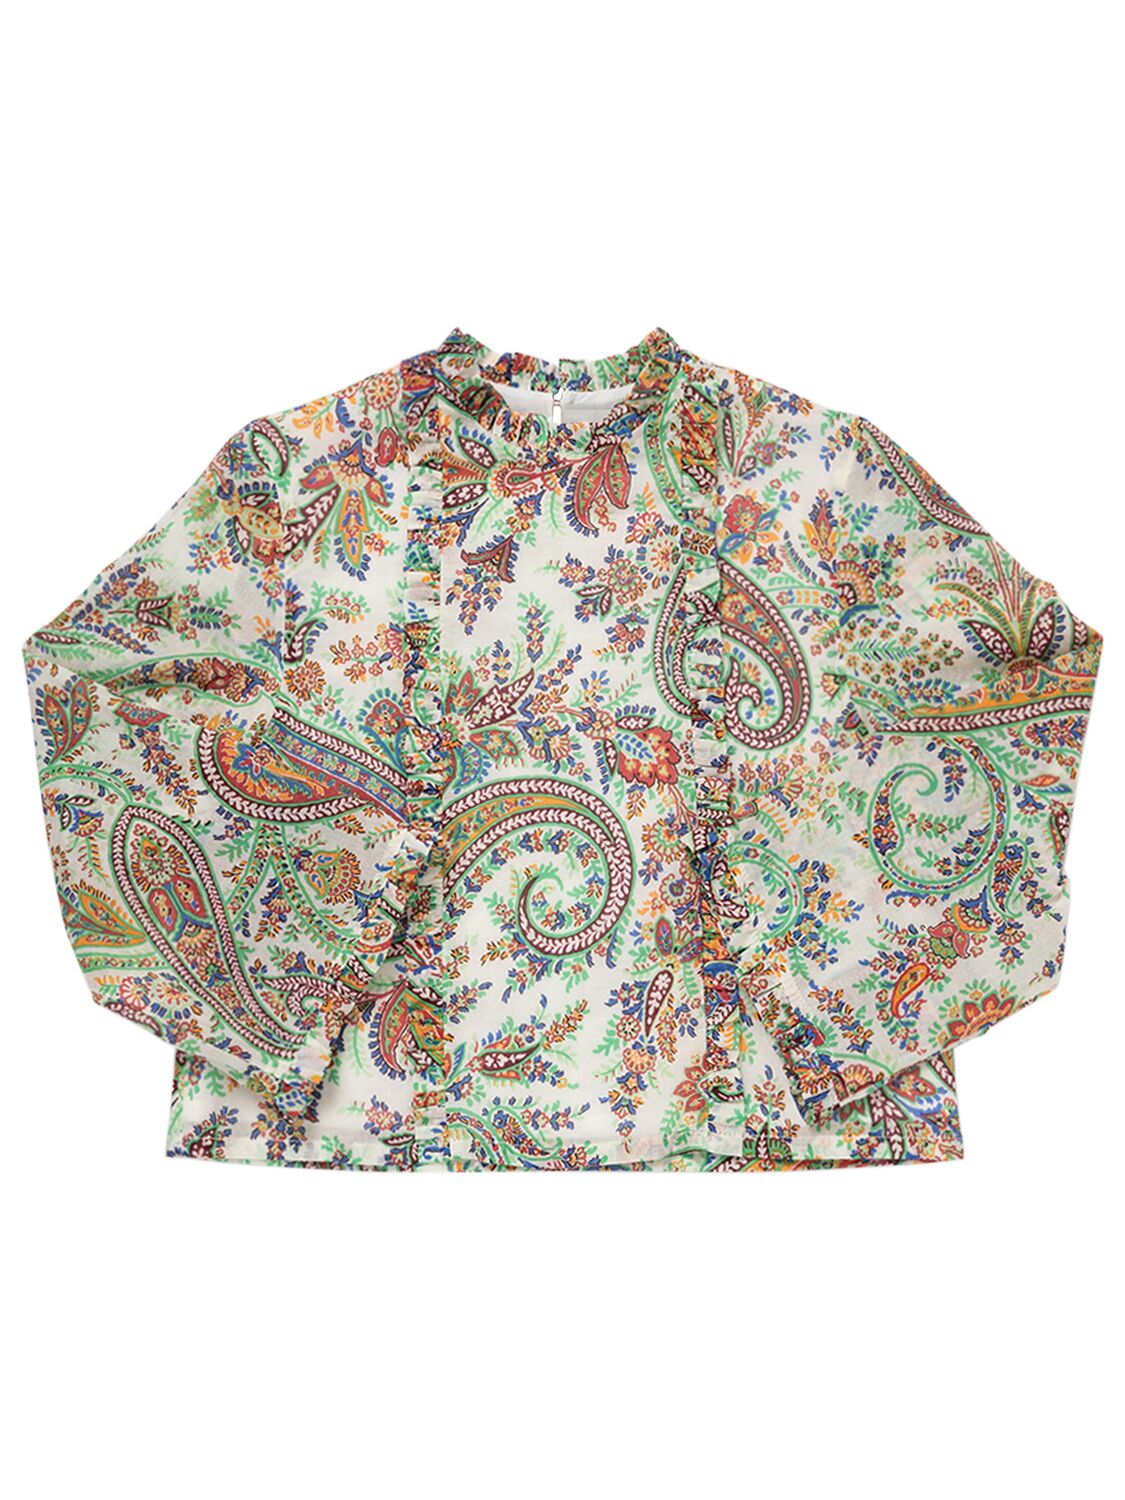 Image of Printed Cotton Muslin Shirt